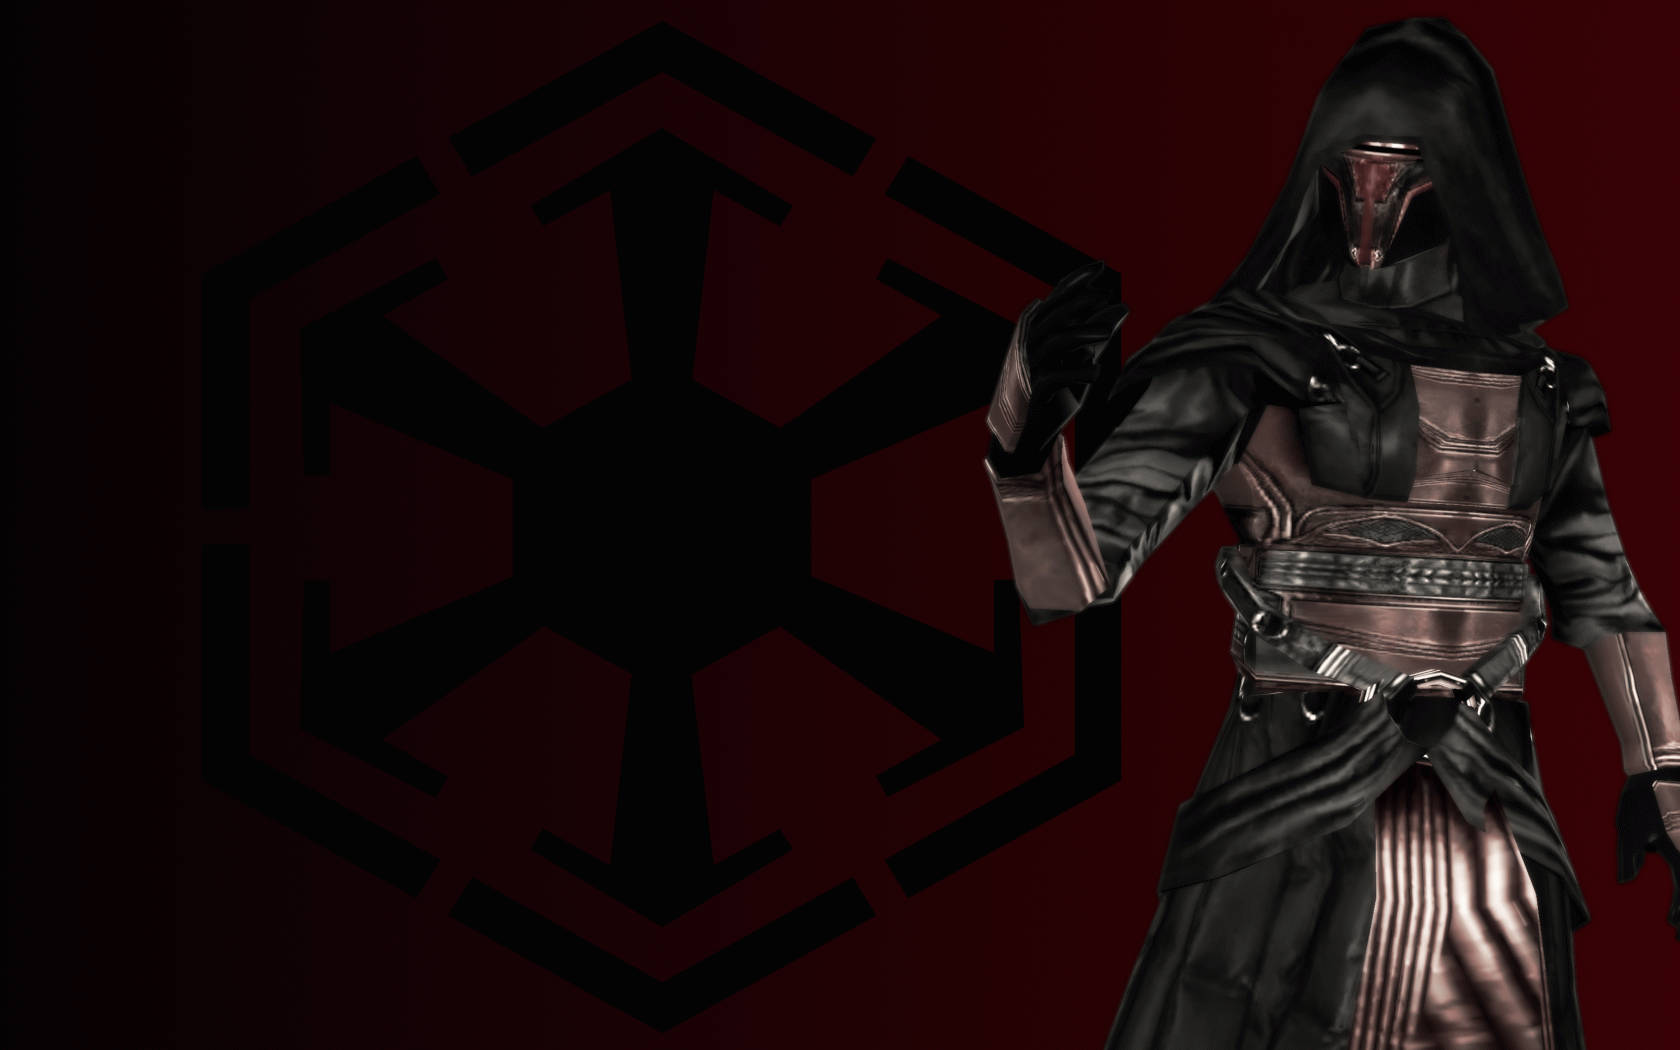 Darth Revan – A Powerful Sith Lord